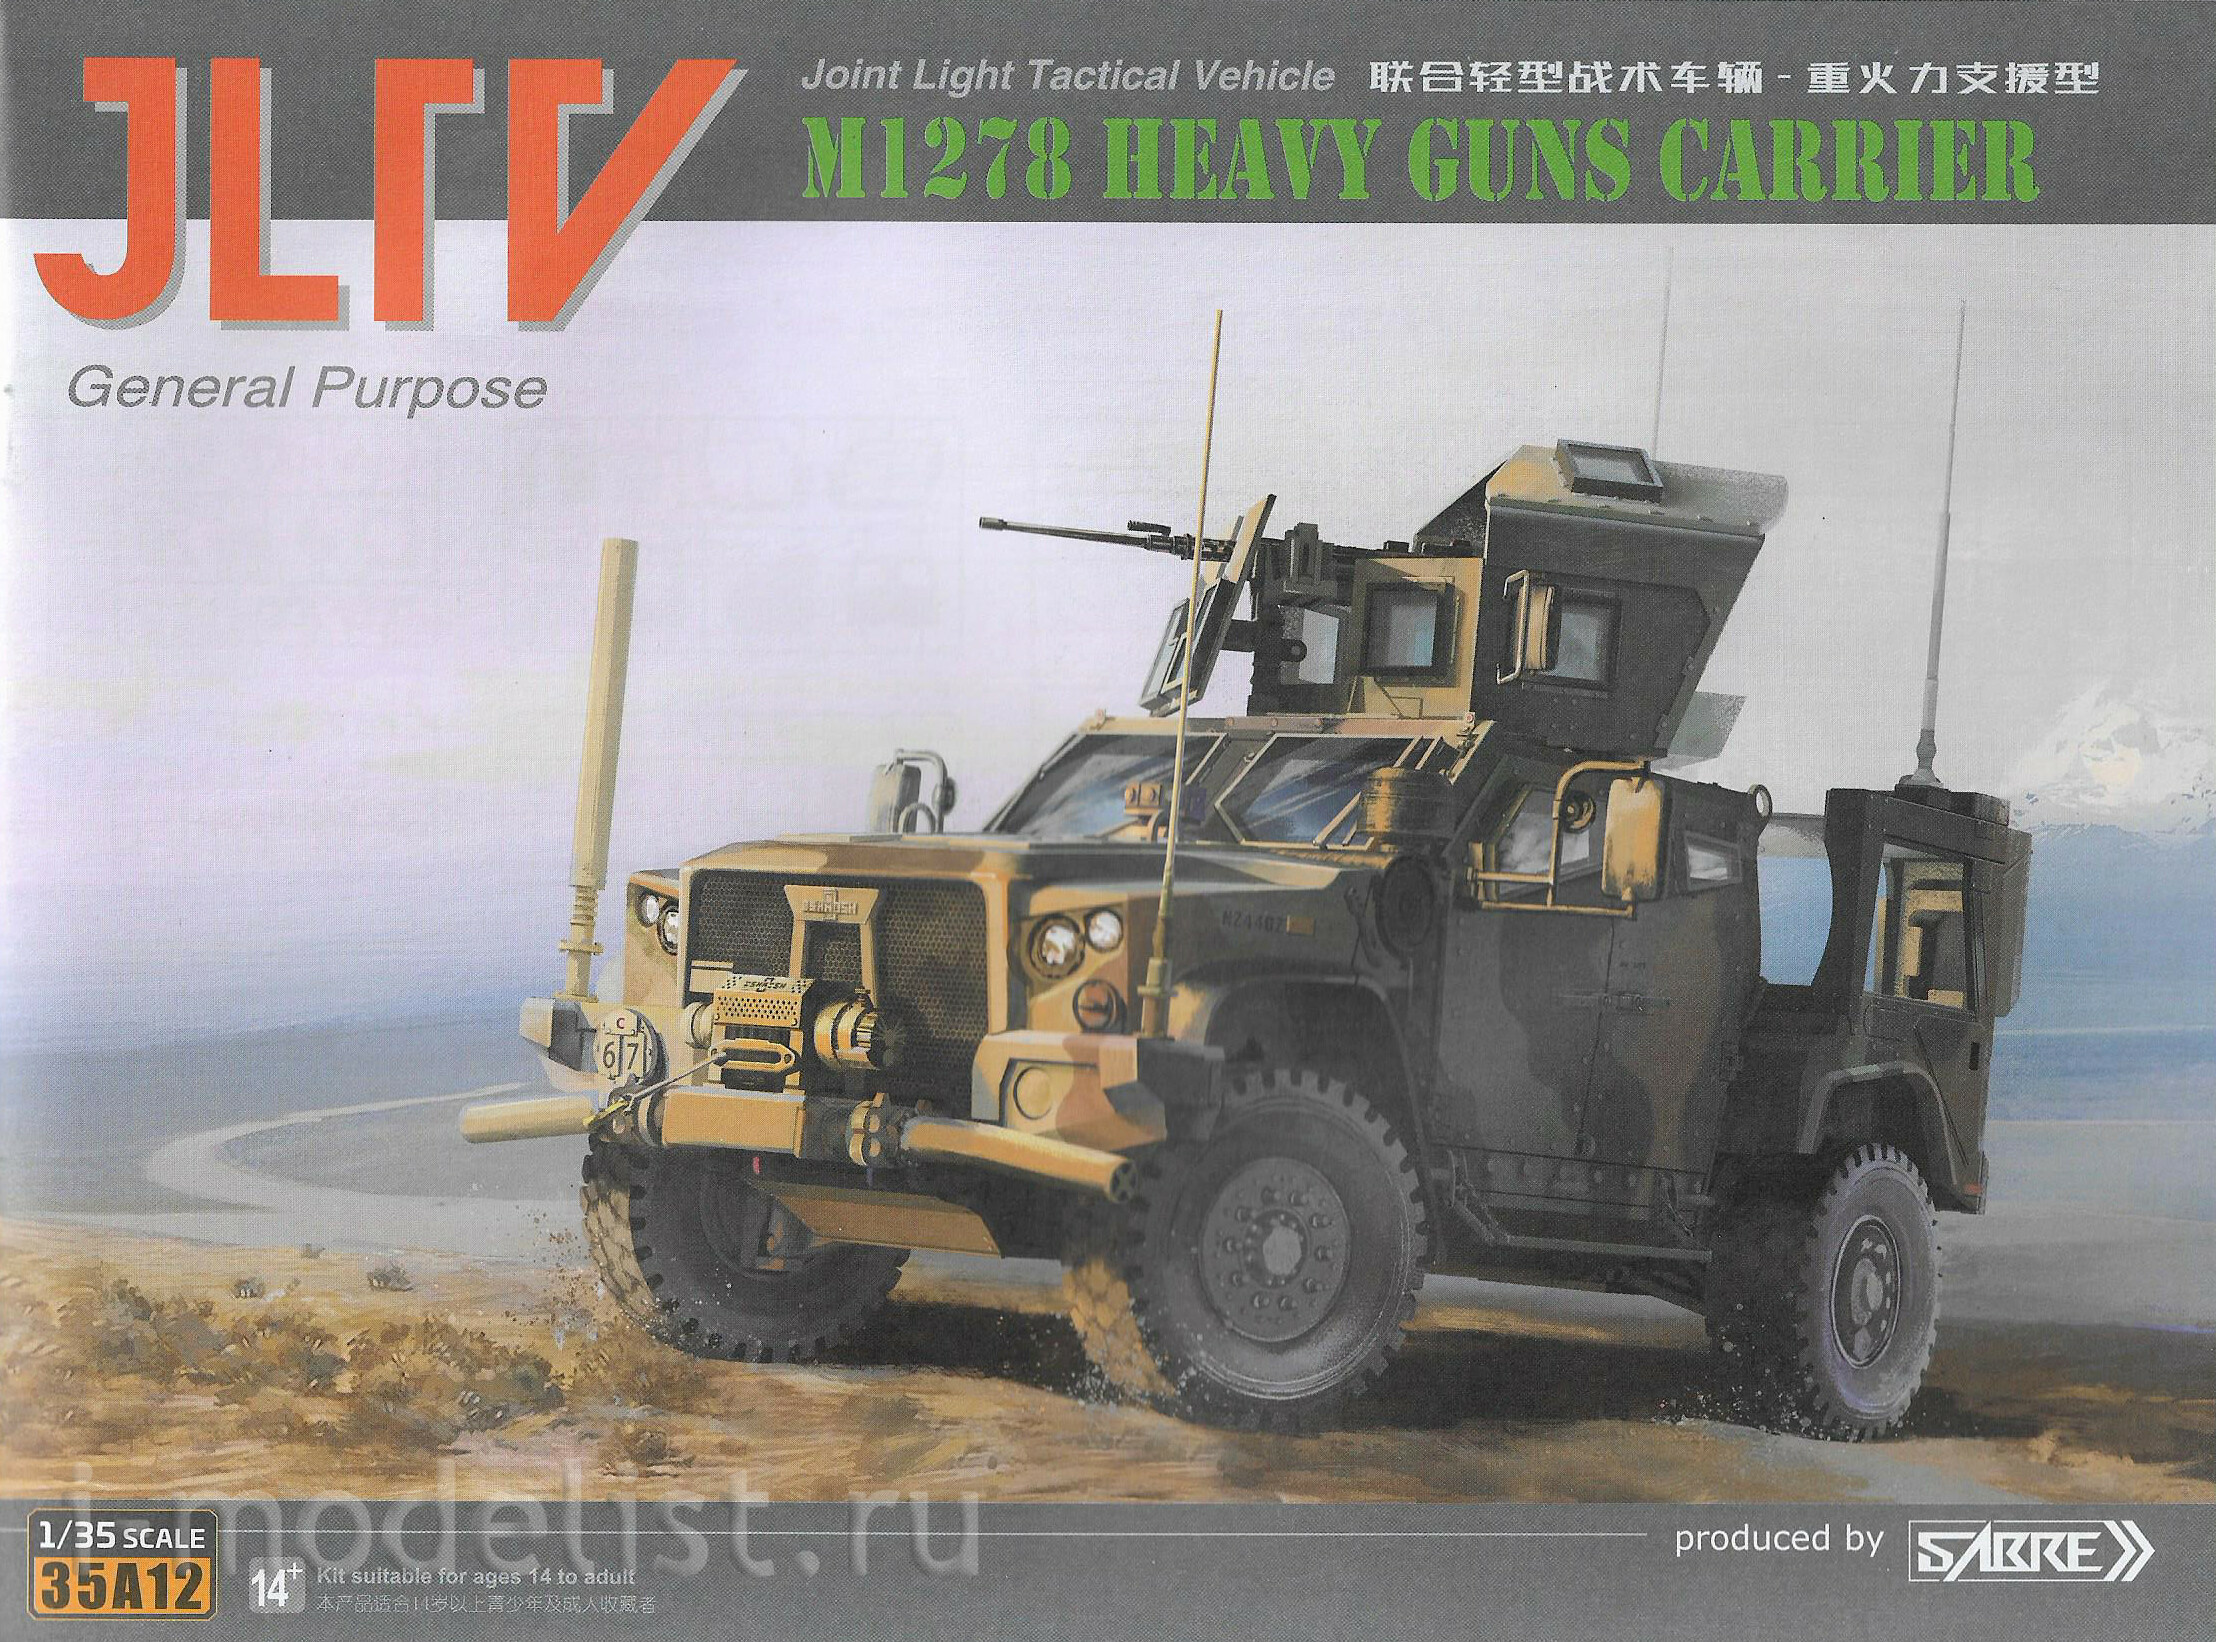 35A12-P Sabre Model 1/35 JLTV M1278 (Combined Light Tactical Vehicle) - Premium Edition